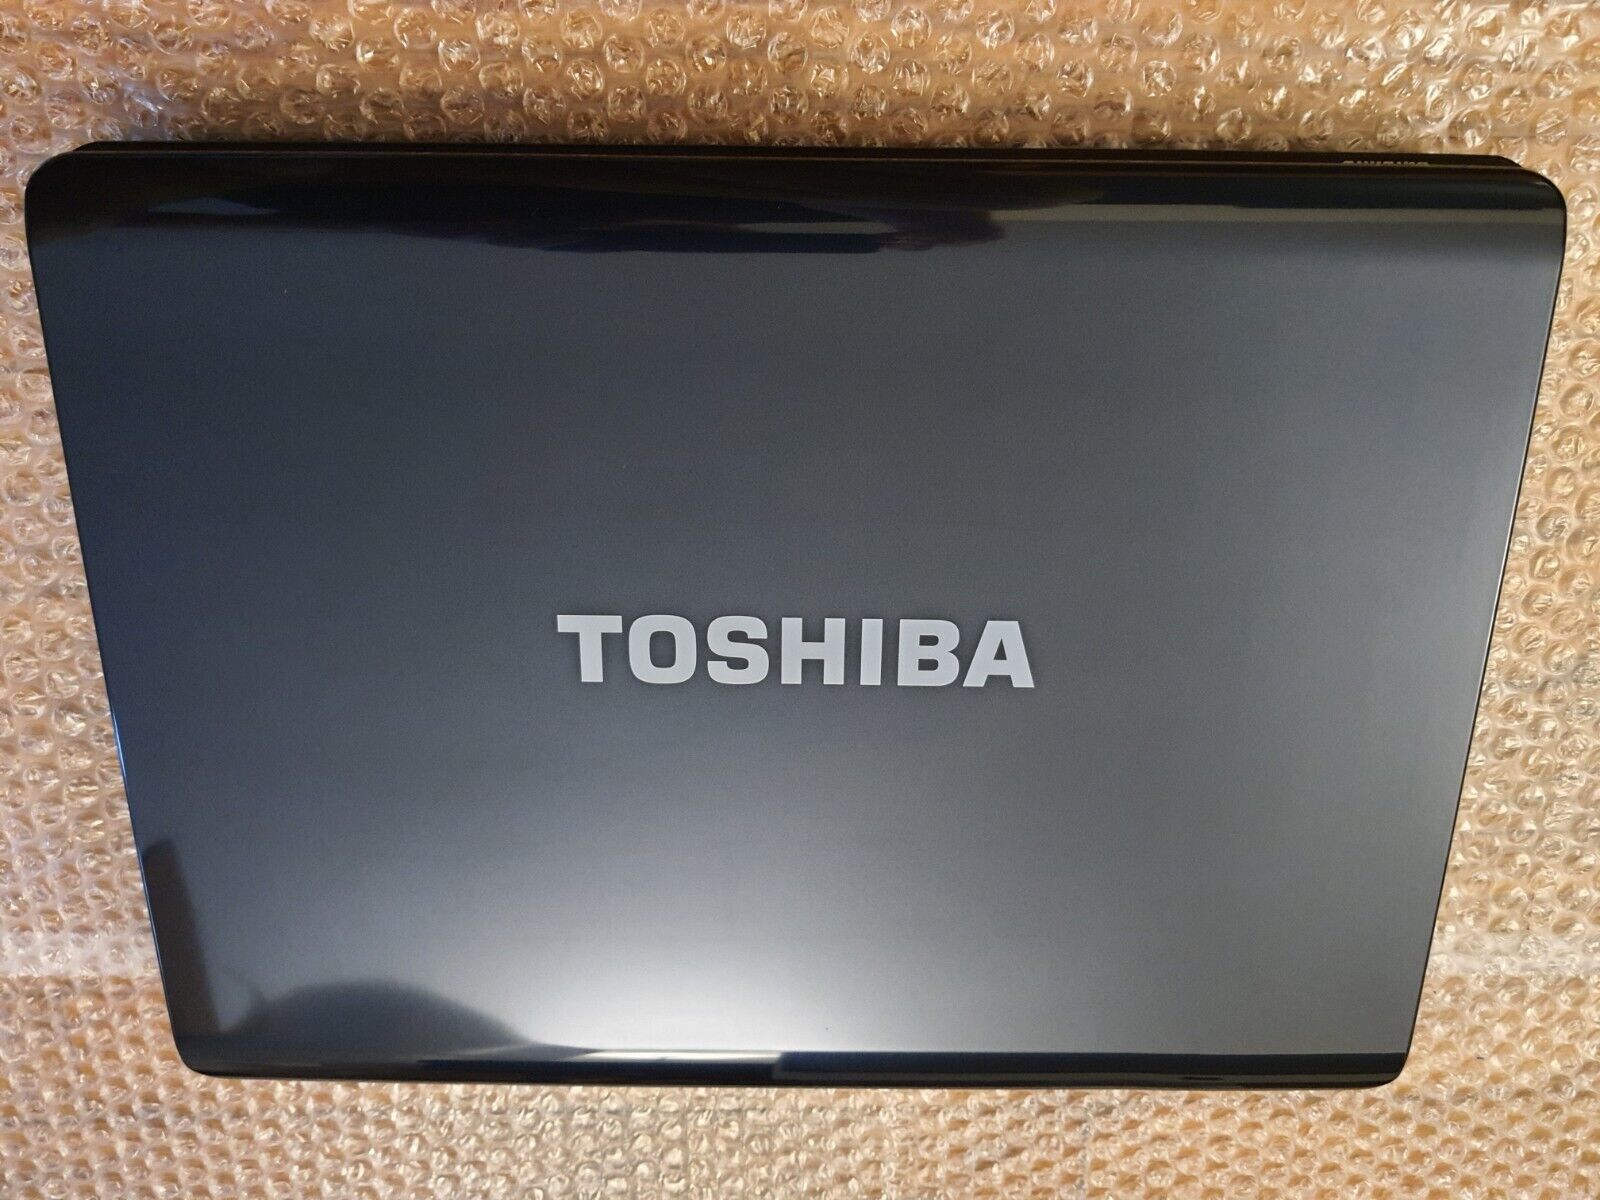 TOSHIBA Satellite 15.4” Intel Pentium Dual-Core T2390, 2GB RAM, Windows 10 Home